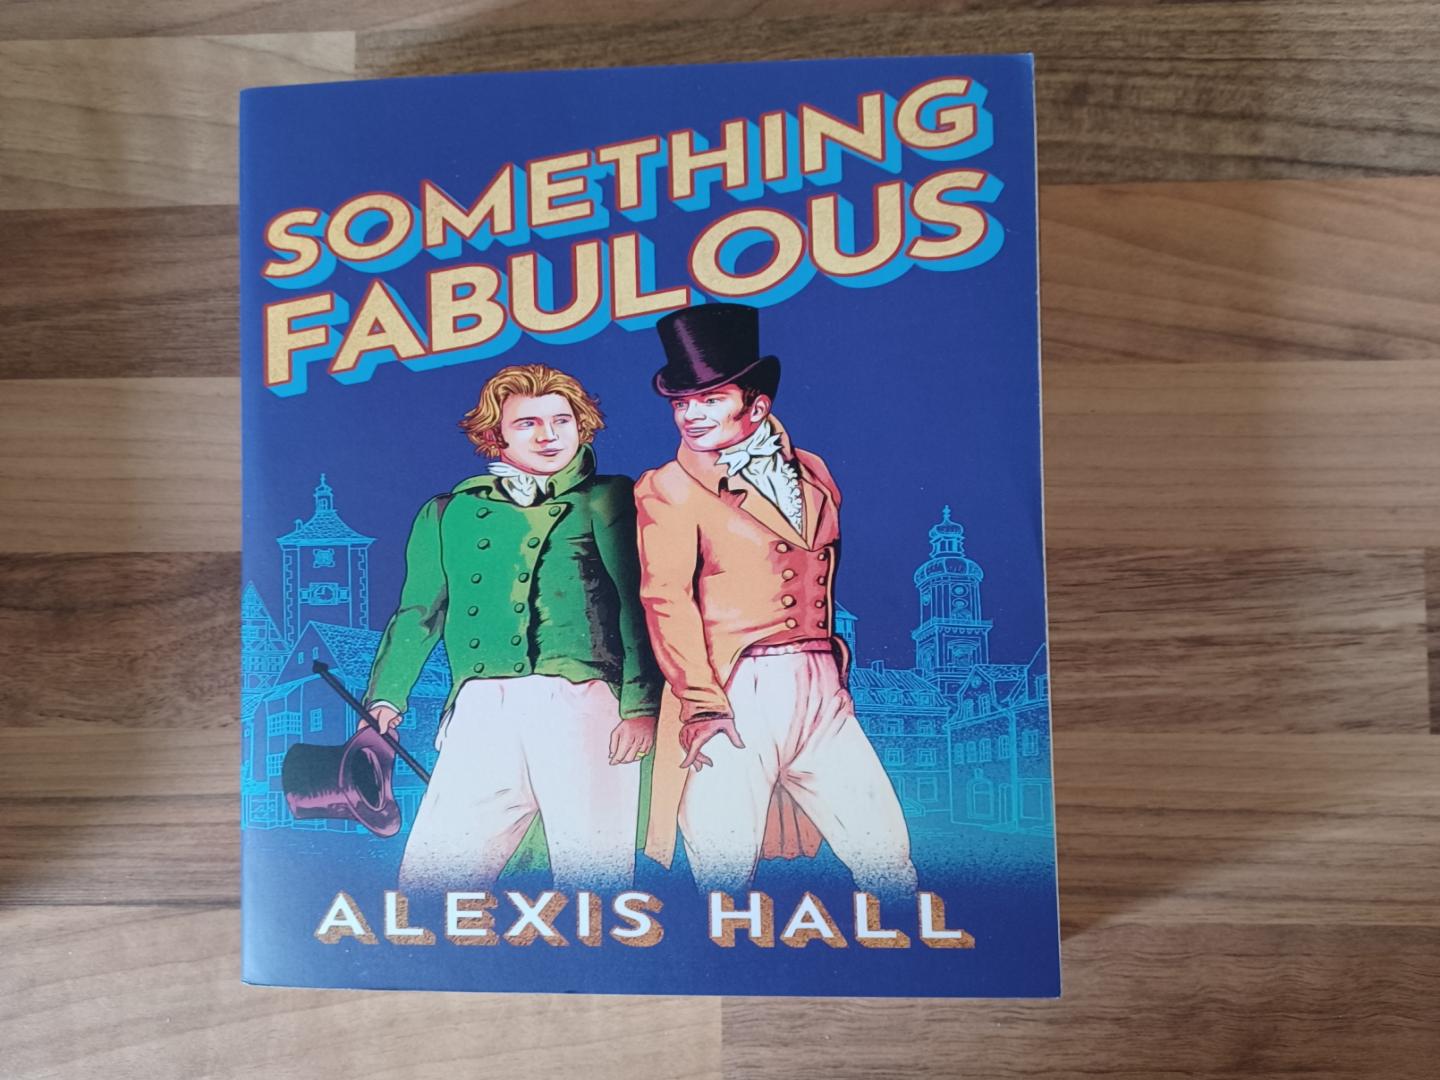 Hall, Alexis - Something Fabulous